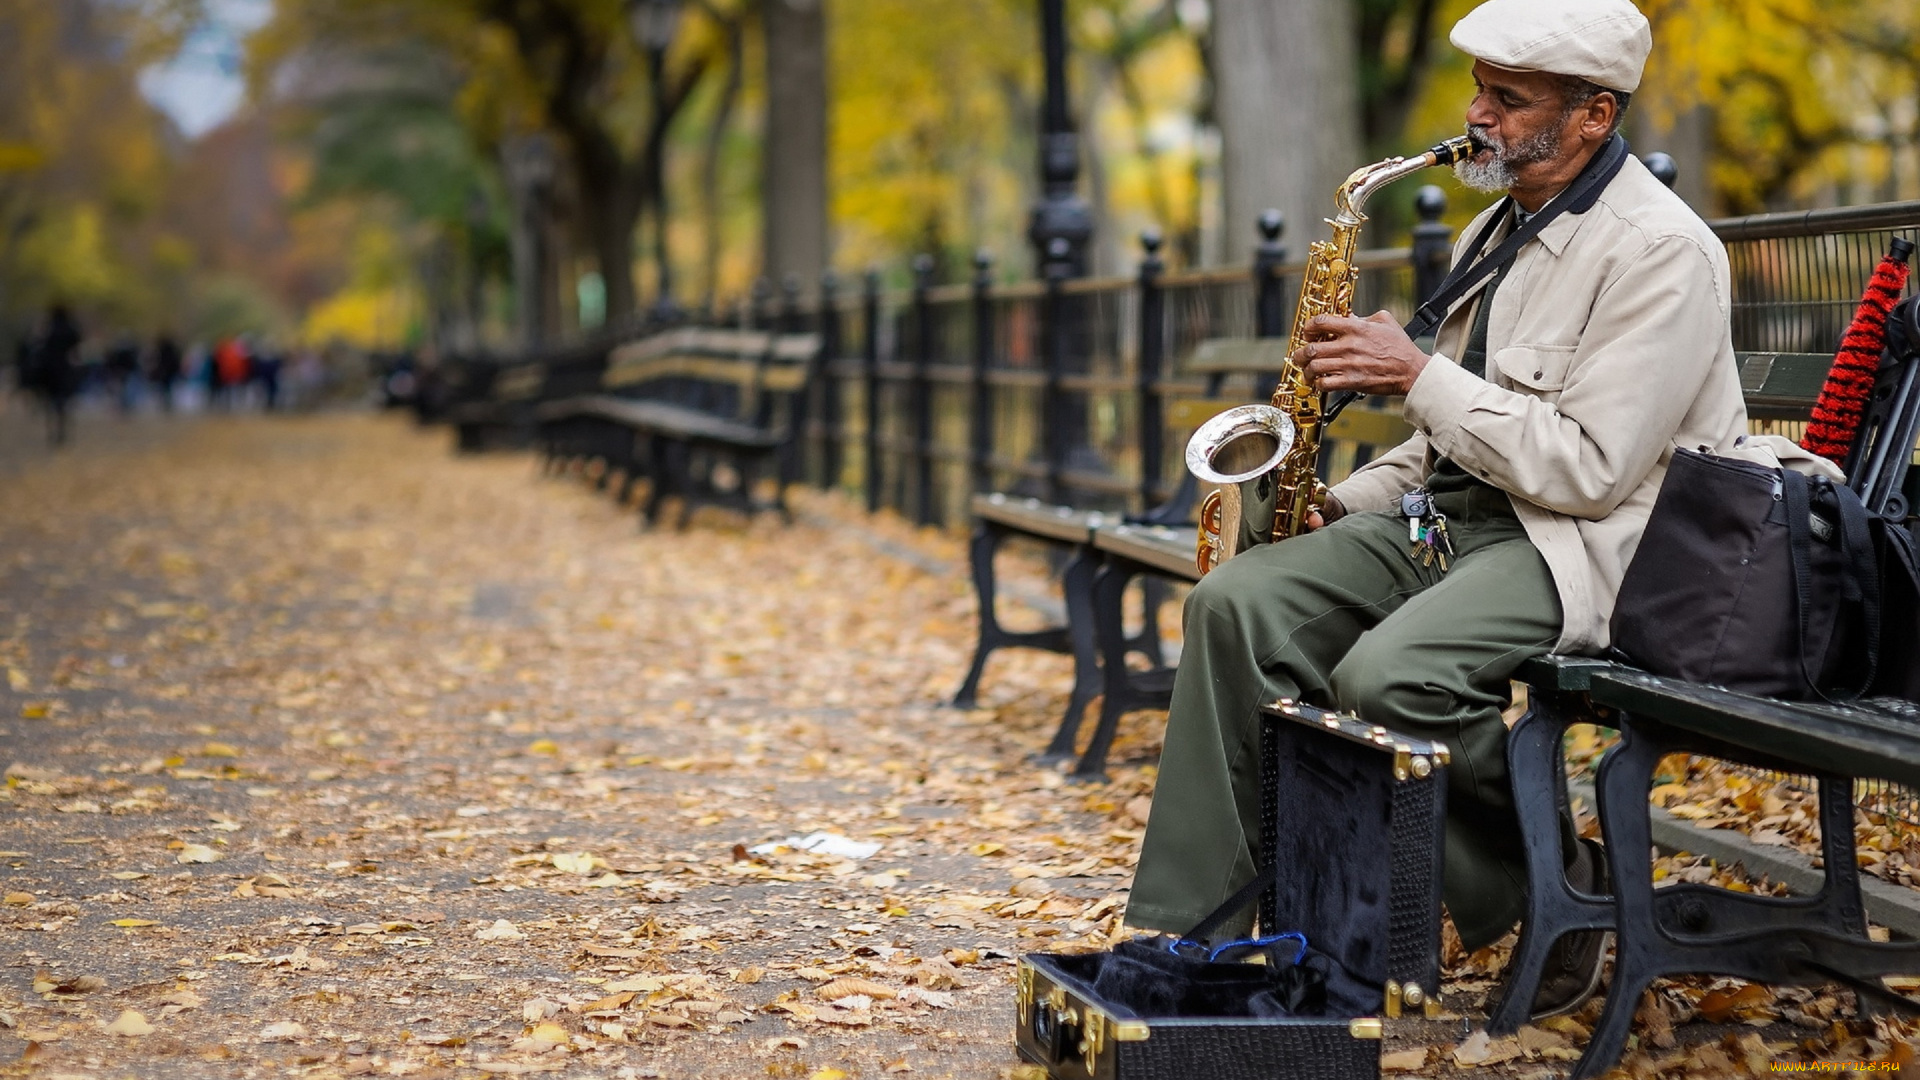 музыка, -другое, улица, парк, скамейка, саксофон, мужчина